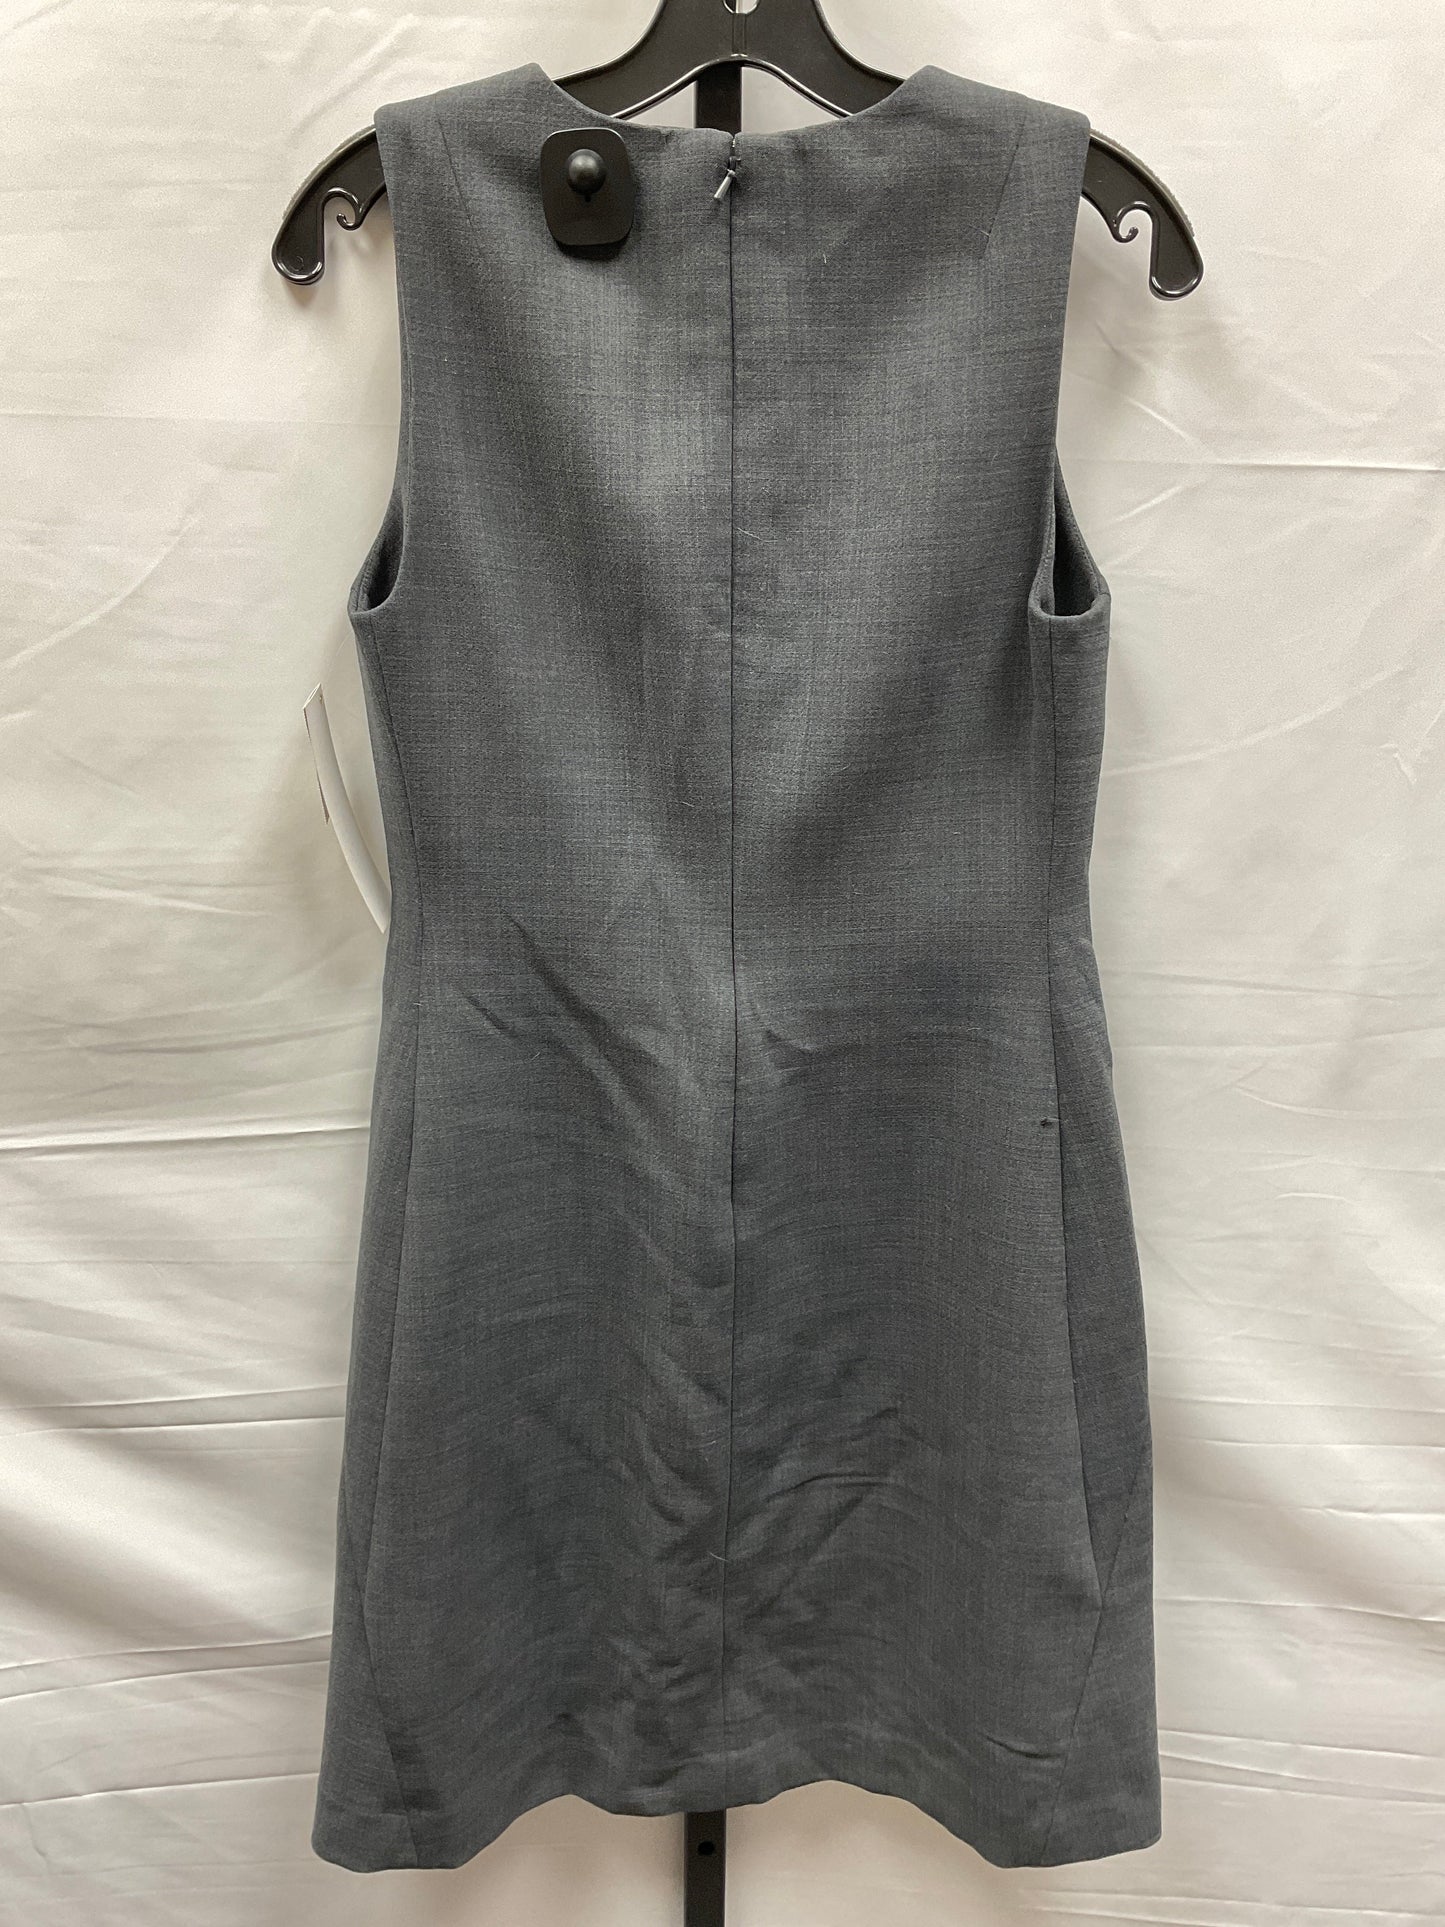 Grey Dress Designer Tory Burch, Size 6